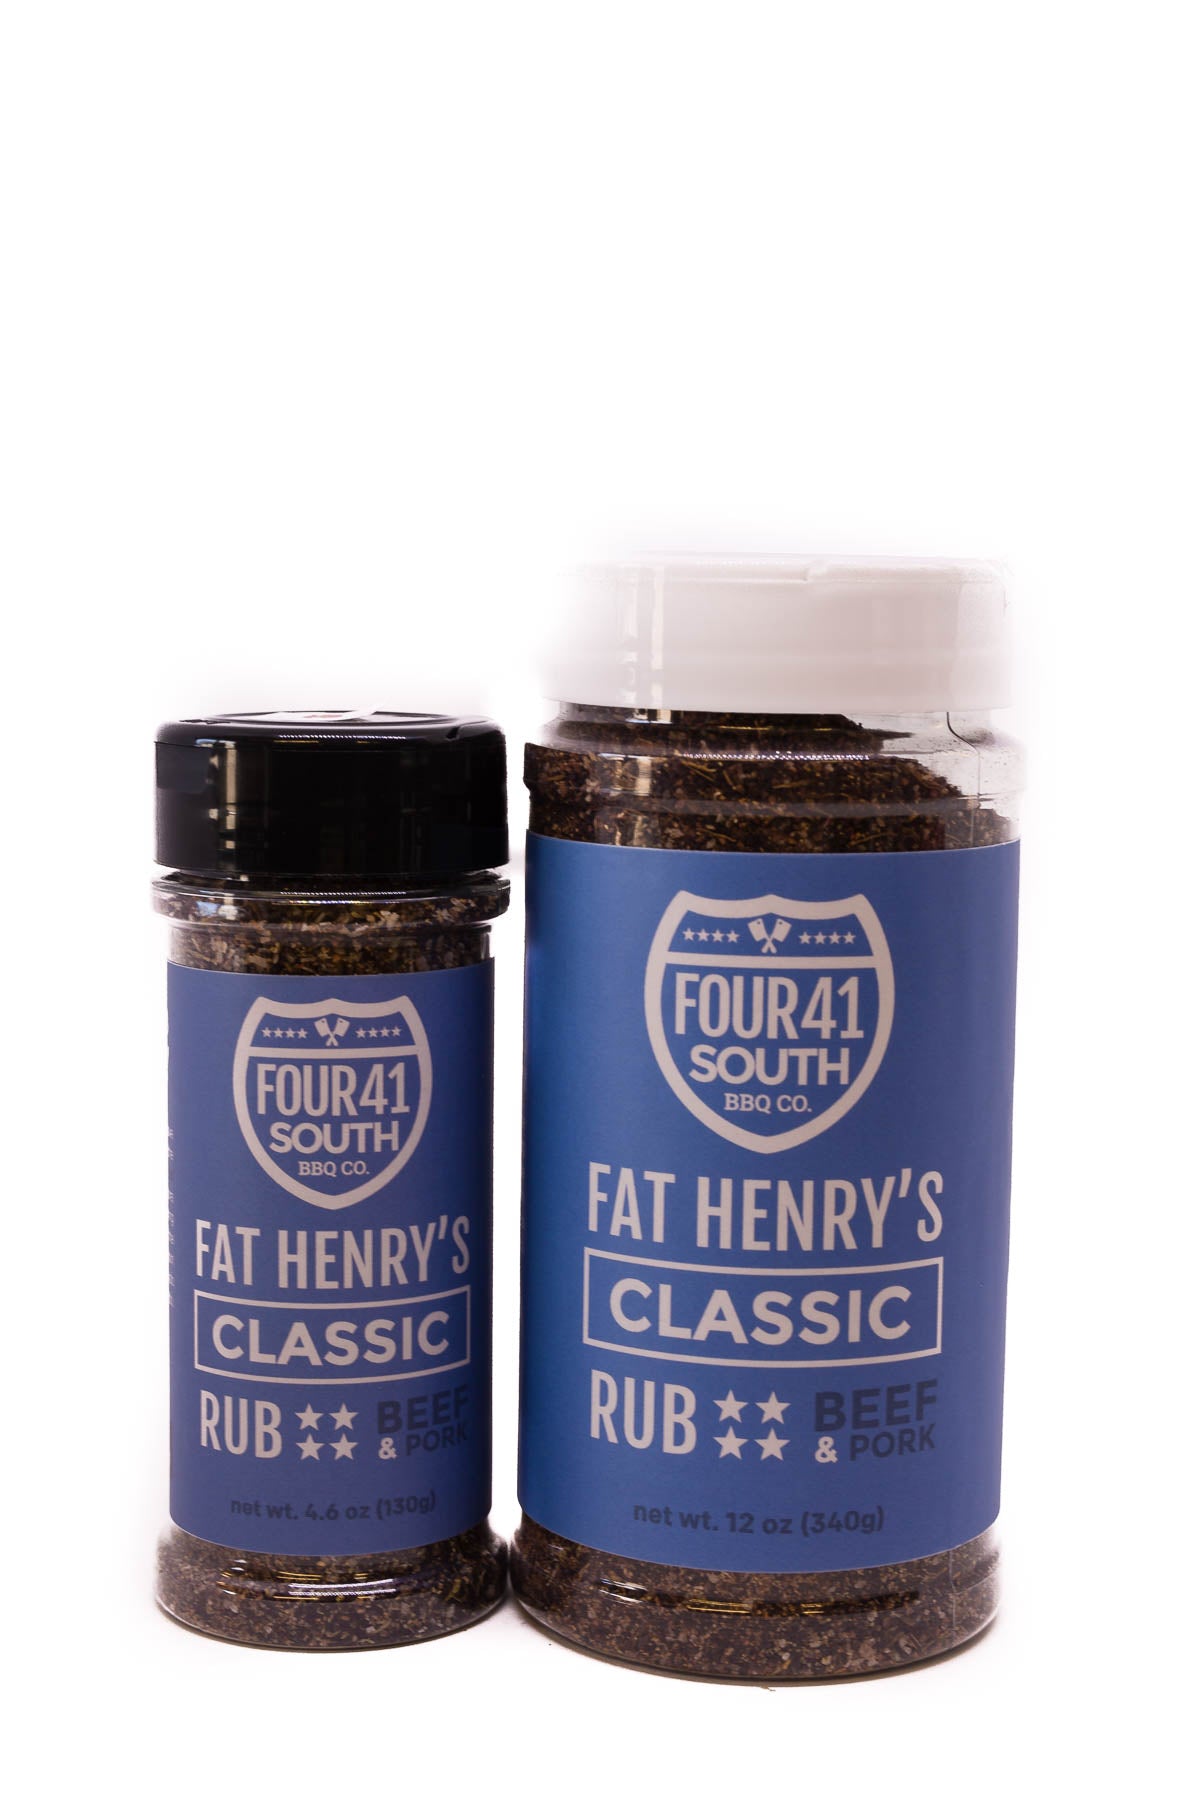 Four 41 South: Fat Henry's Classic Rub Beef & Pork – Atlanta Grill Company